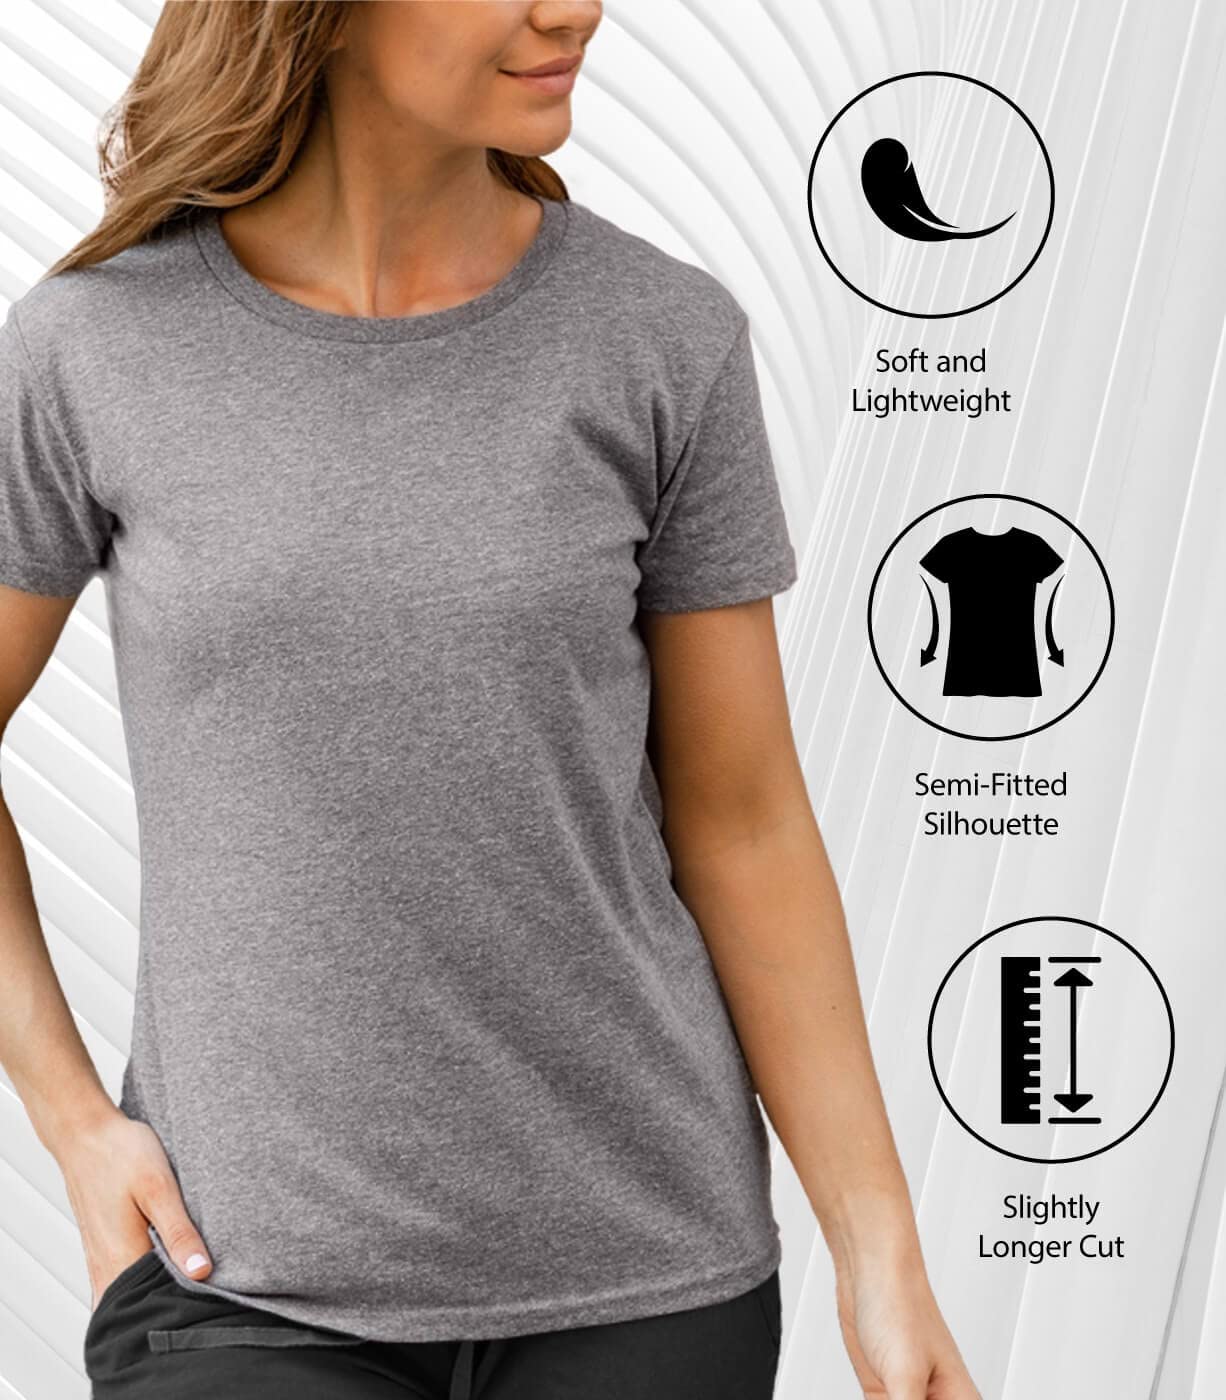 HYBRID APPAREL - Peanuts - Linus Blanket - Women's Short Sleeve Graphic T-Shirt - Size X-Large